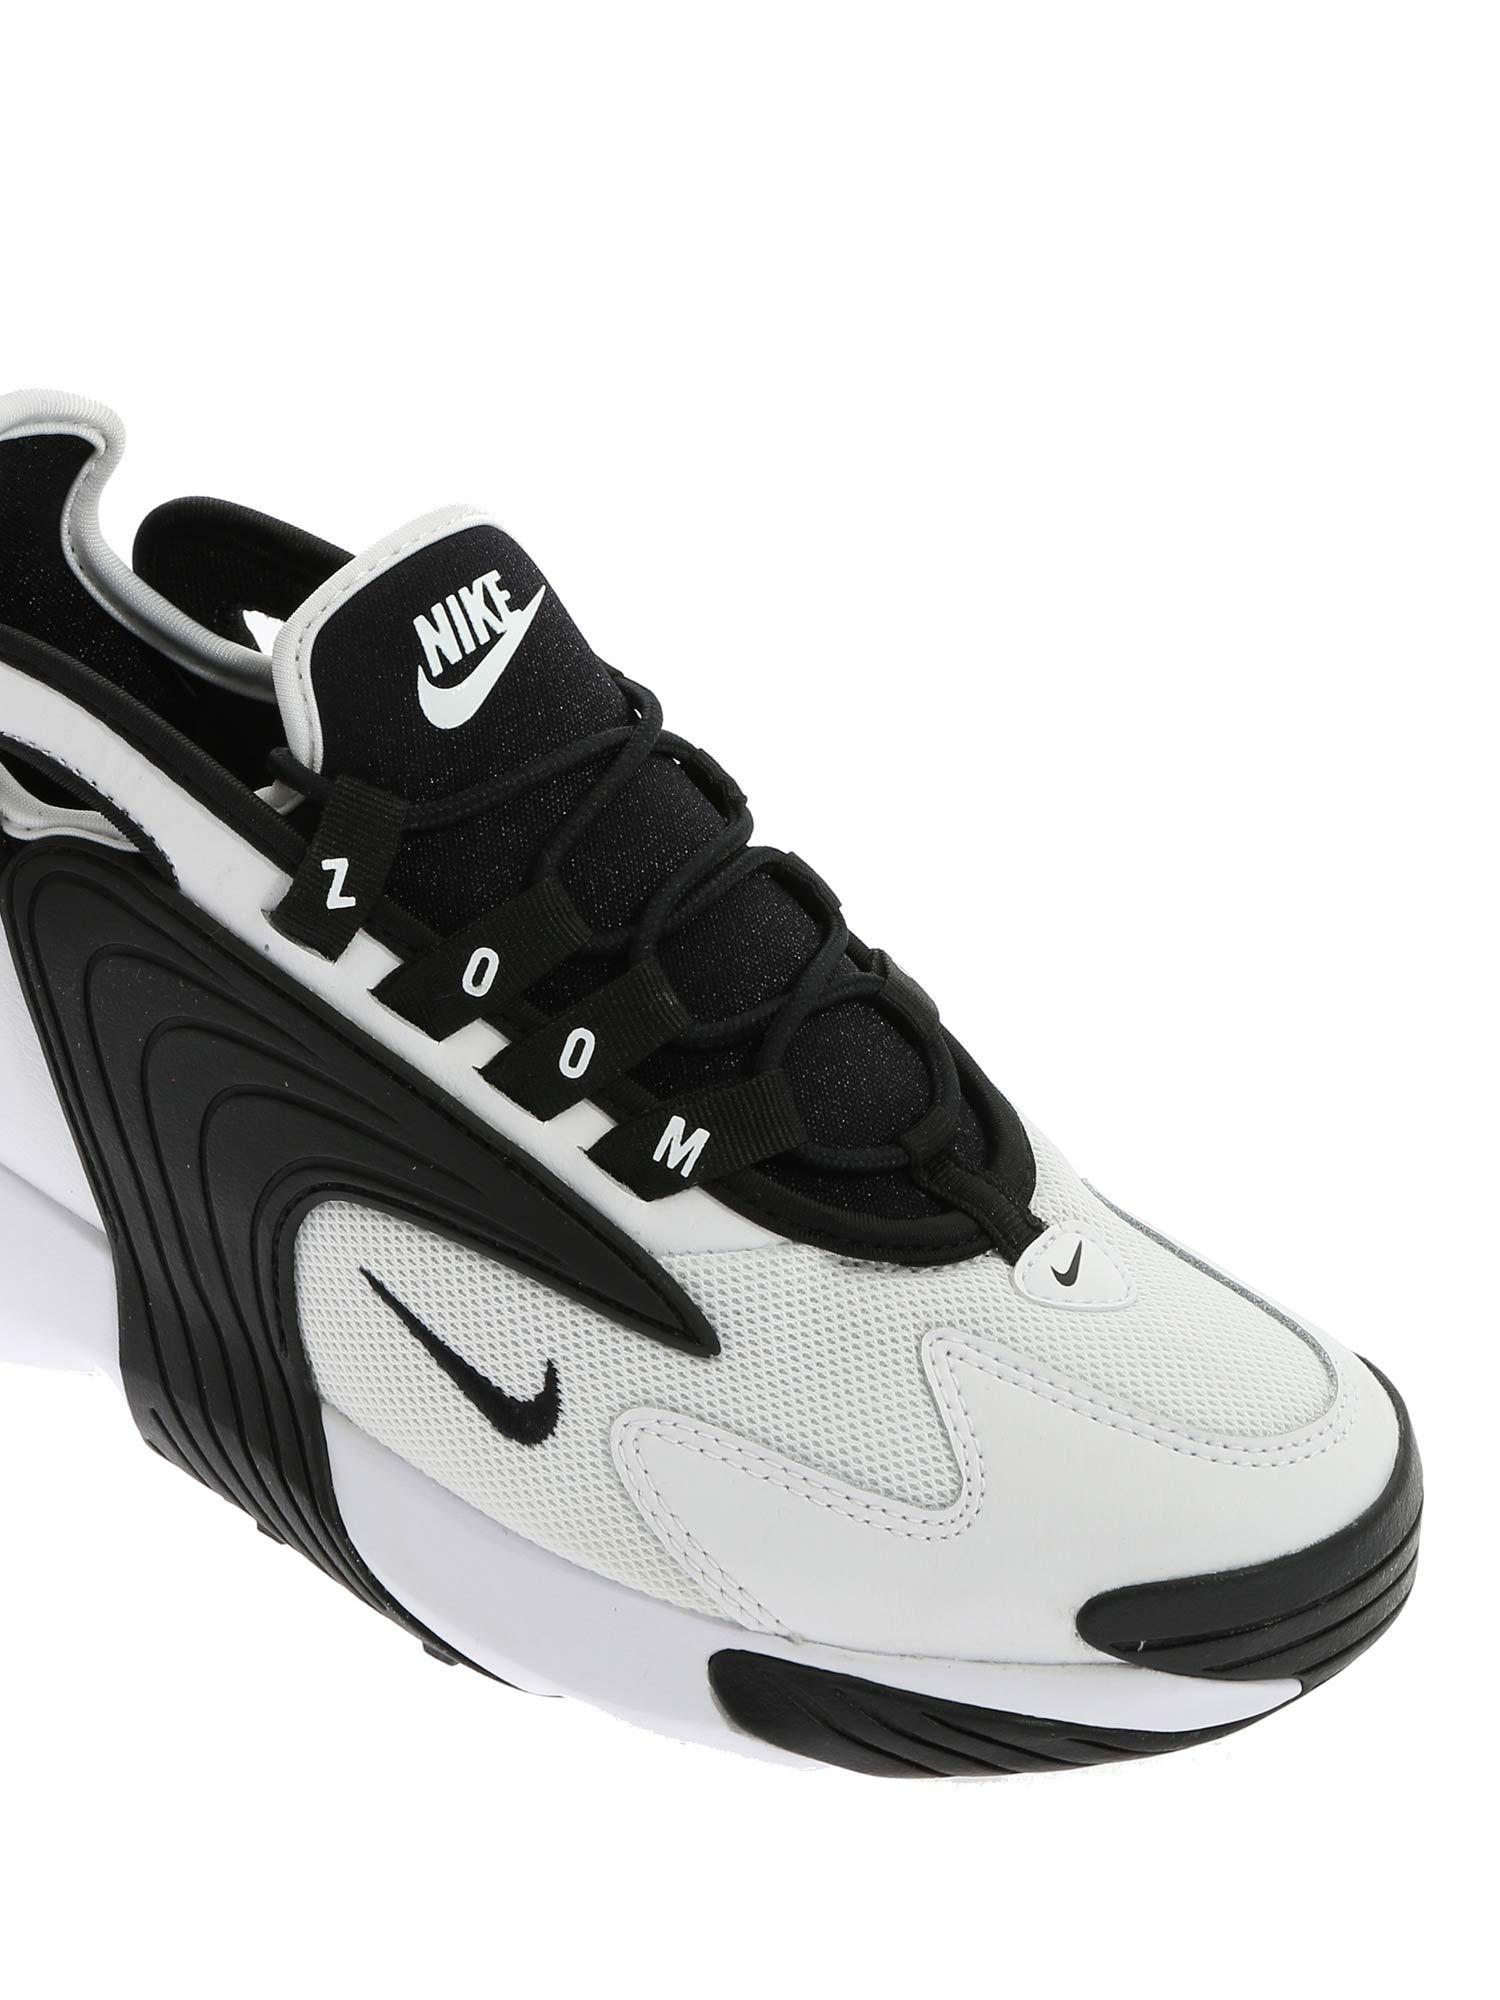 Nike Leather Zoom 2k in White/Black (Black) - Save 56% - Lyst